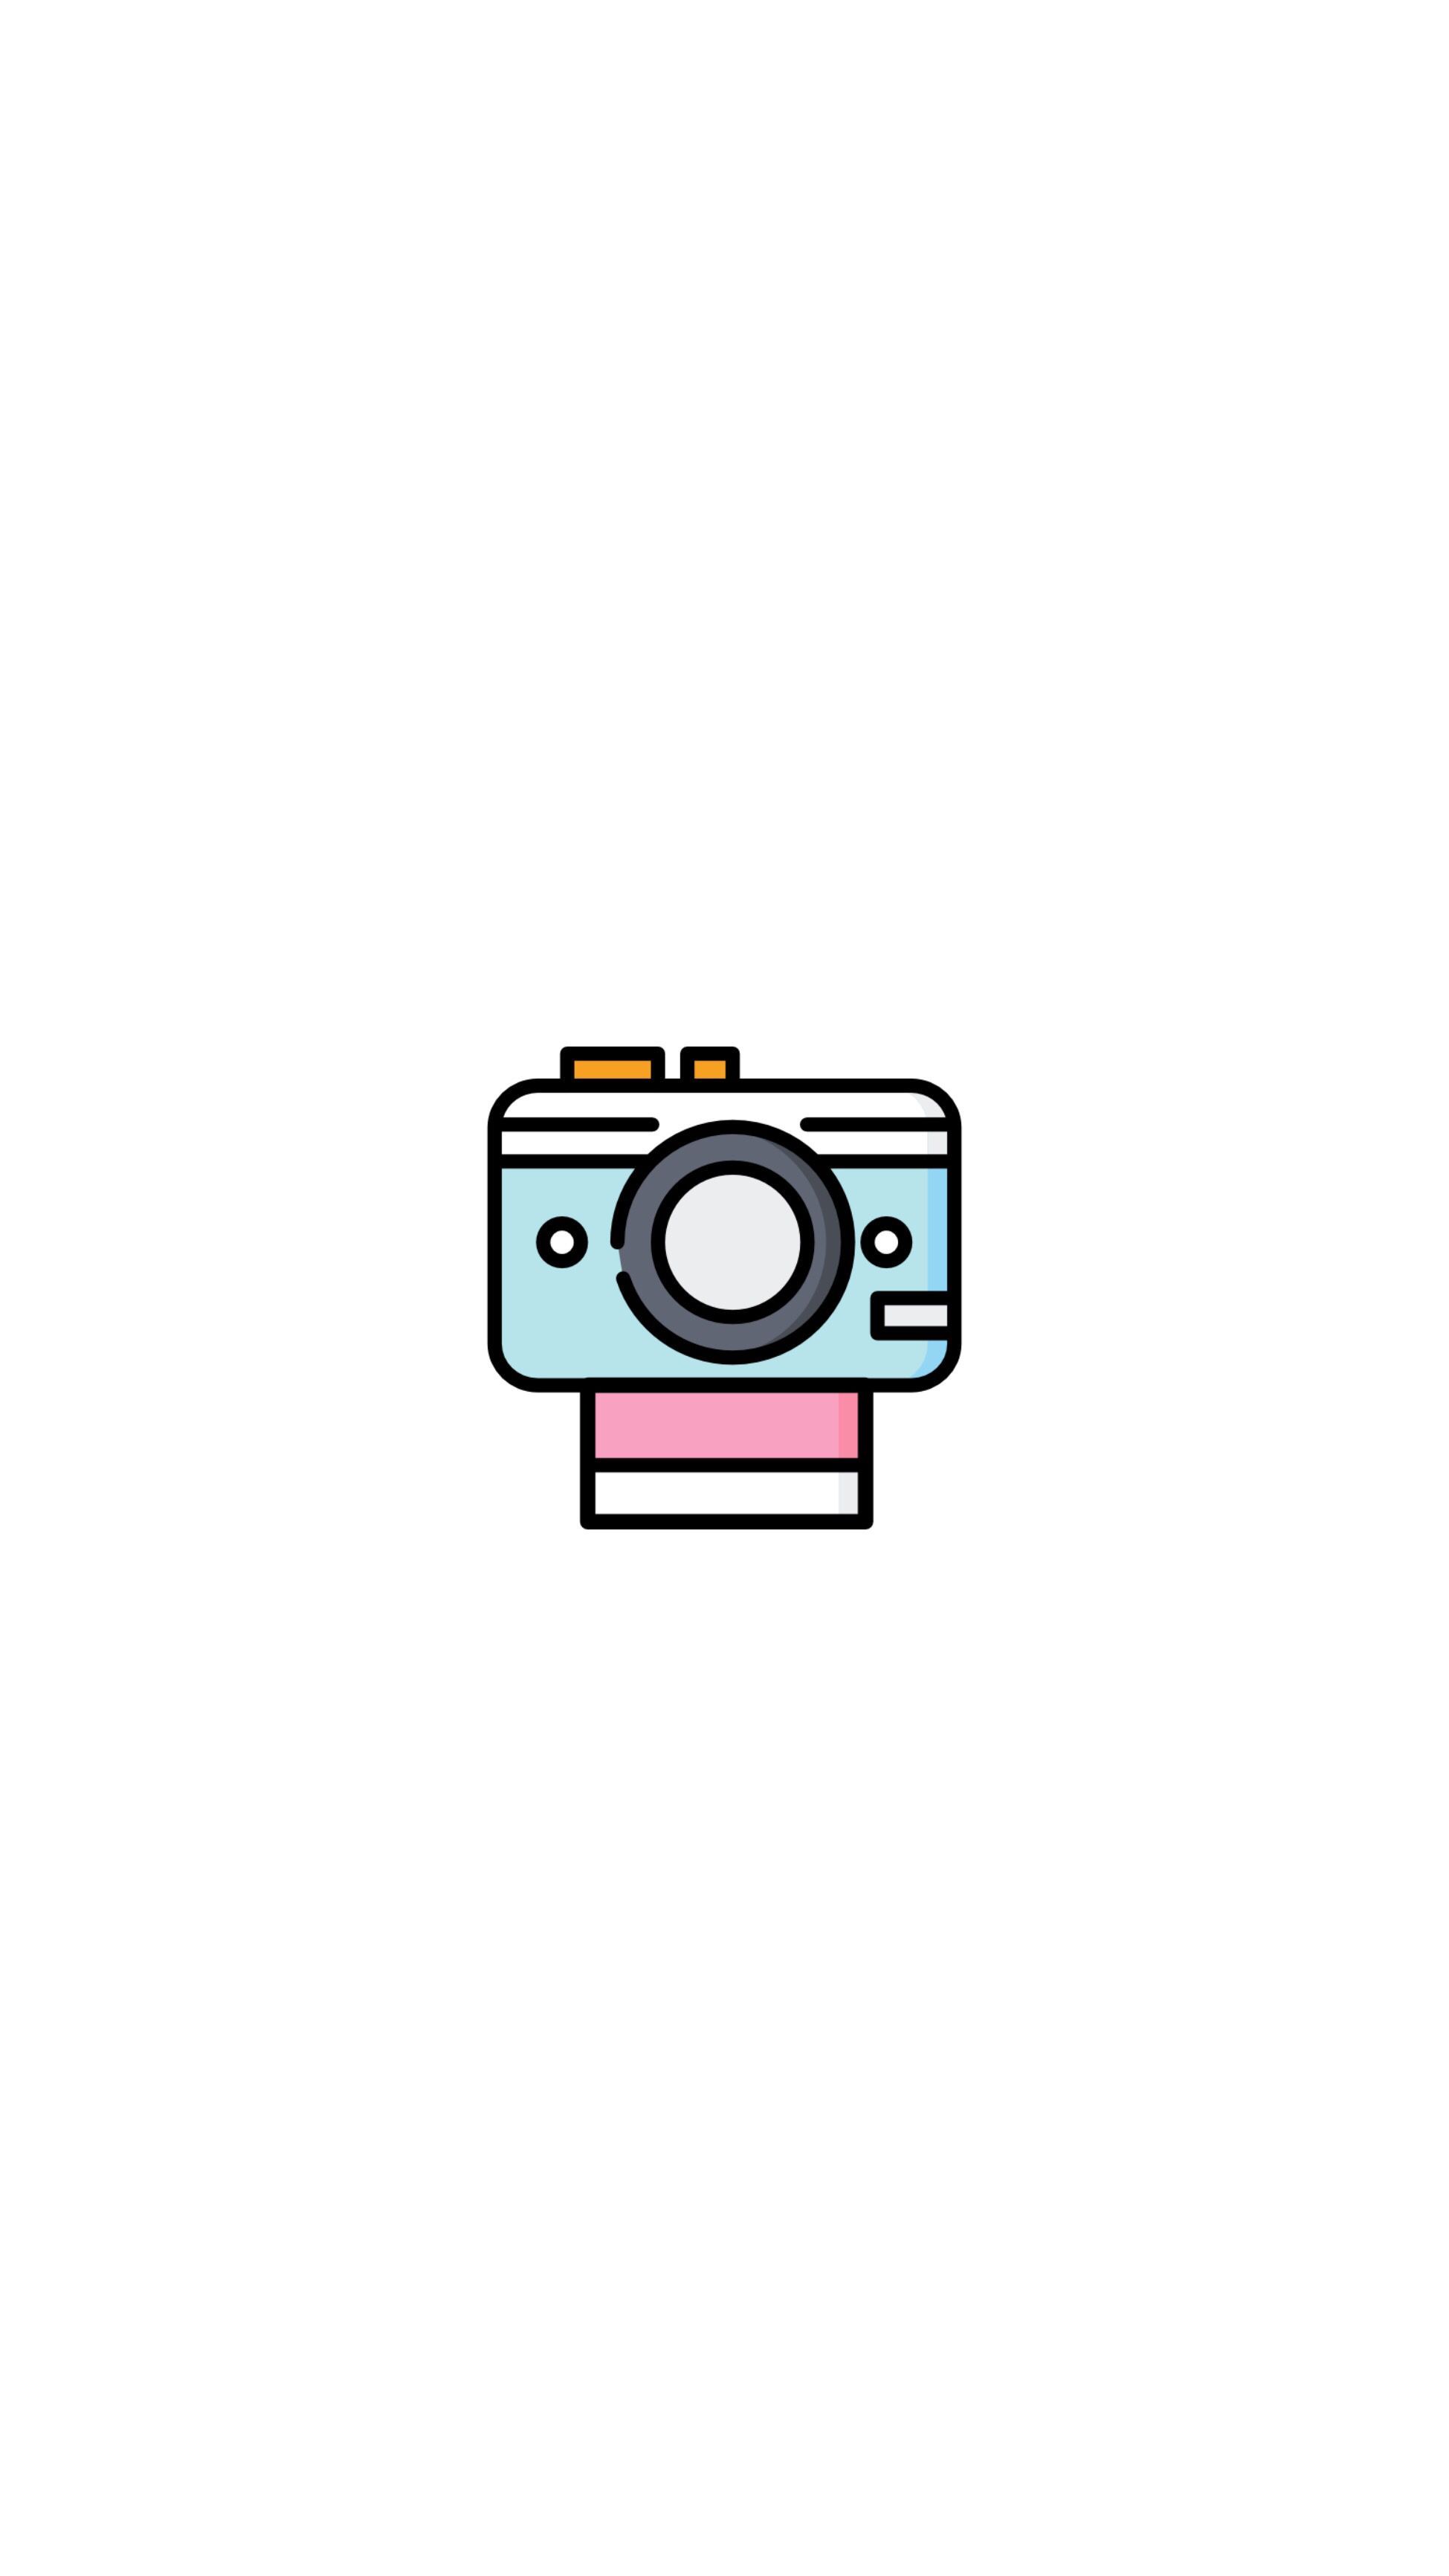 Icy Camera Dslr Link #DSLRphotographer #PhotographyGearAccessories. Instagram logo, Instagram icons, Instagram wallpaper